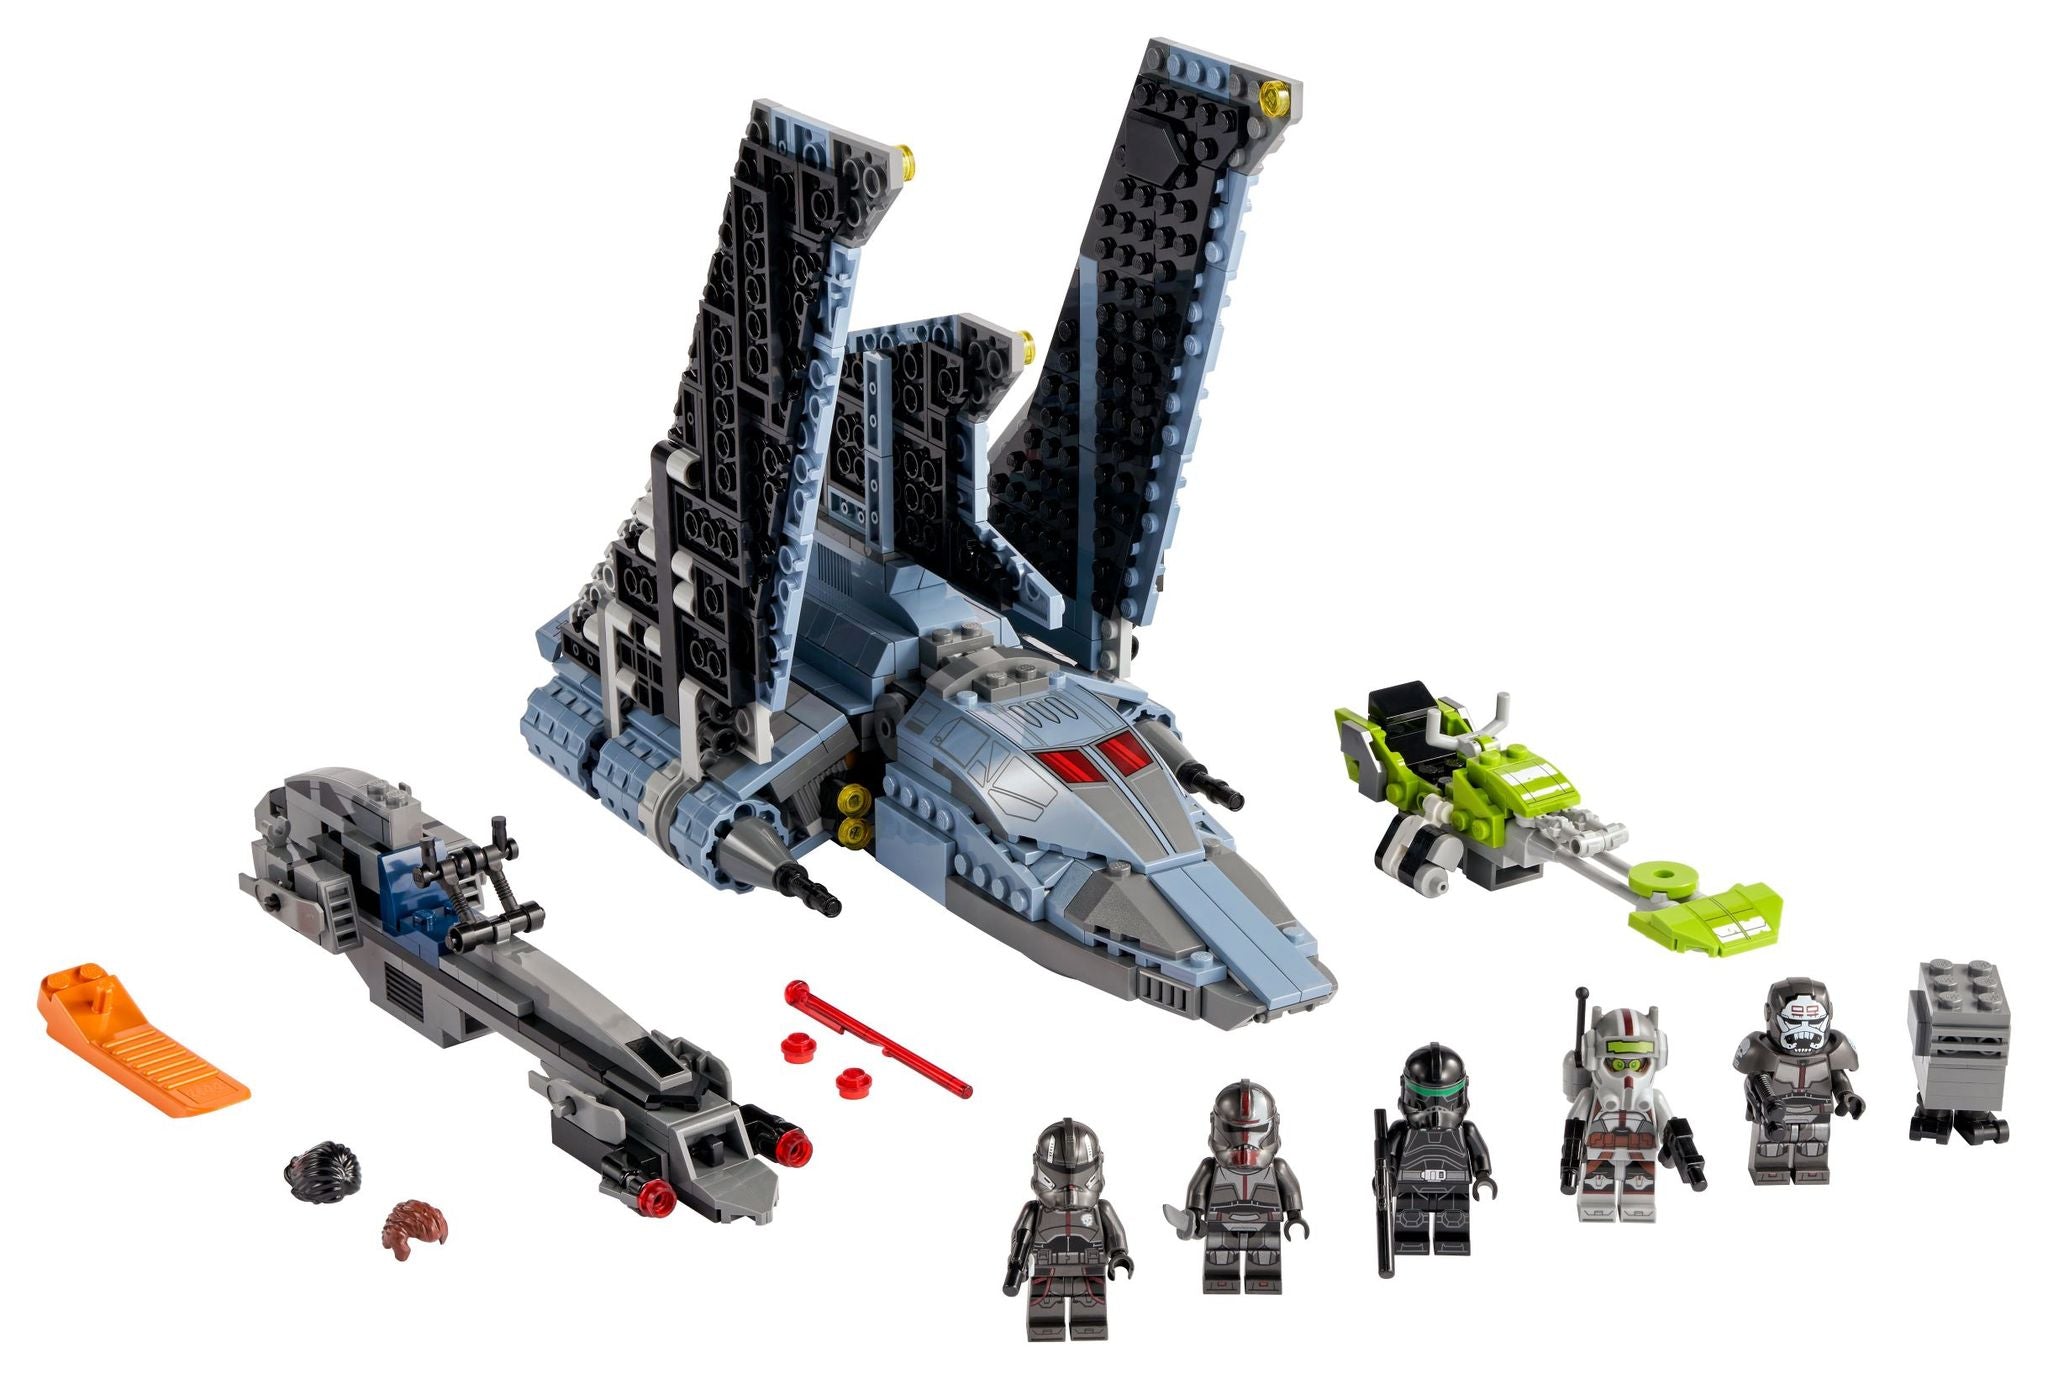 LEGO: Star Wars -The Bad Batch Attack Shuttle